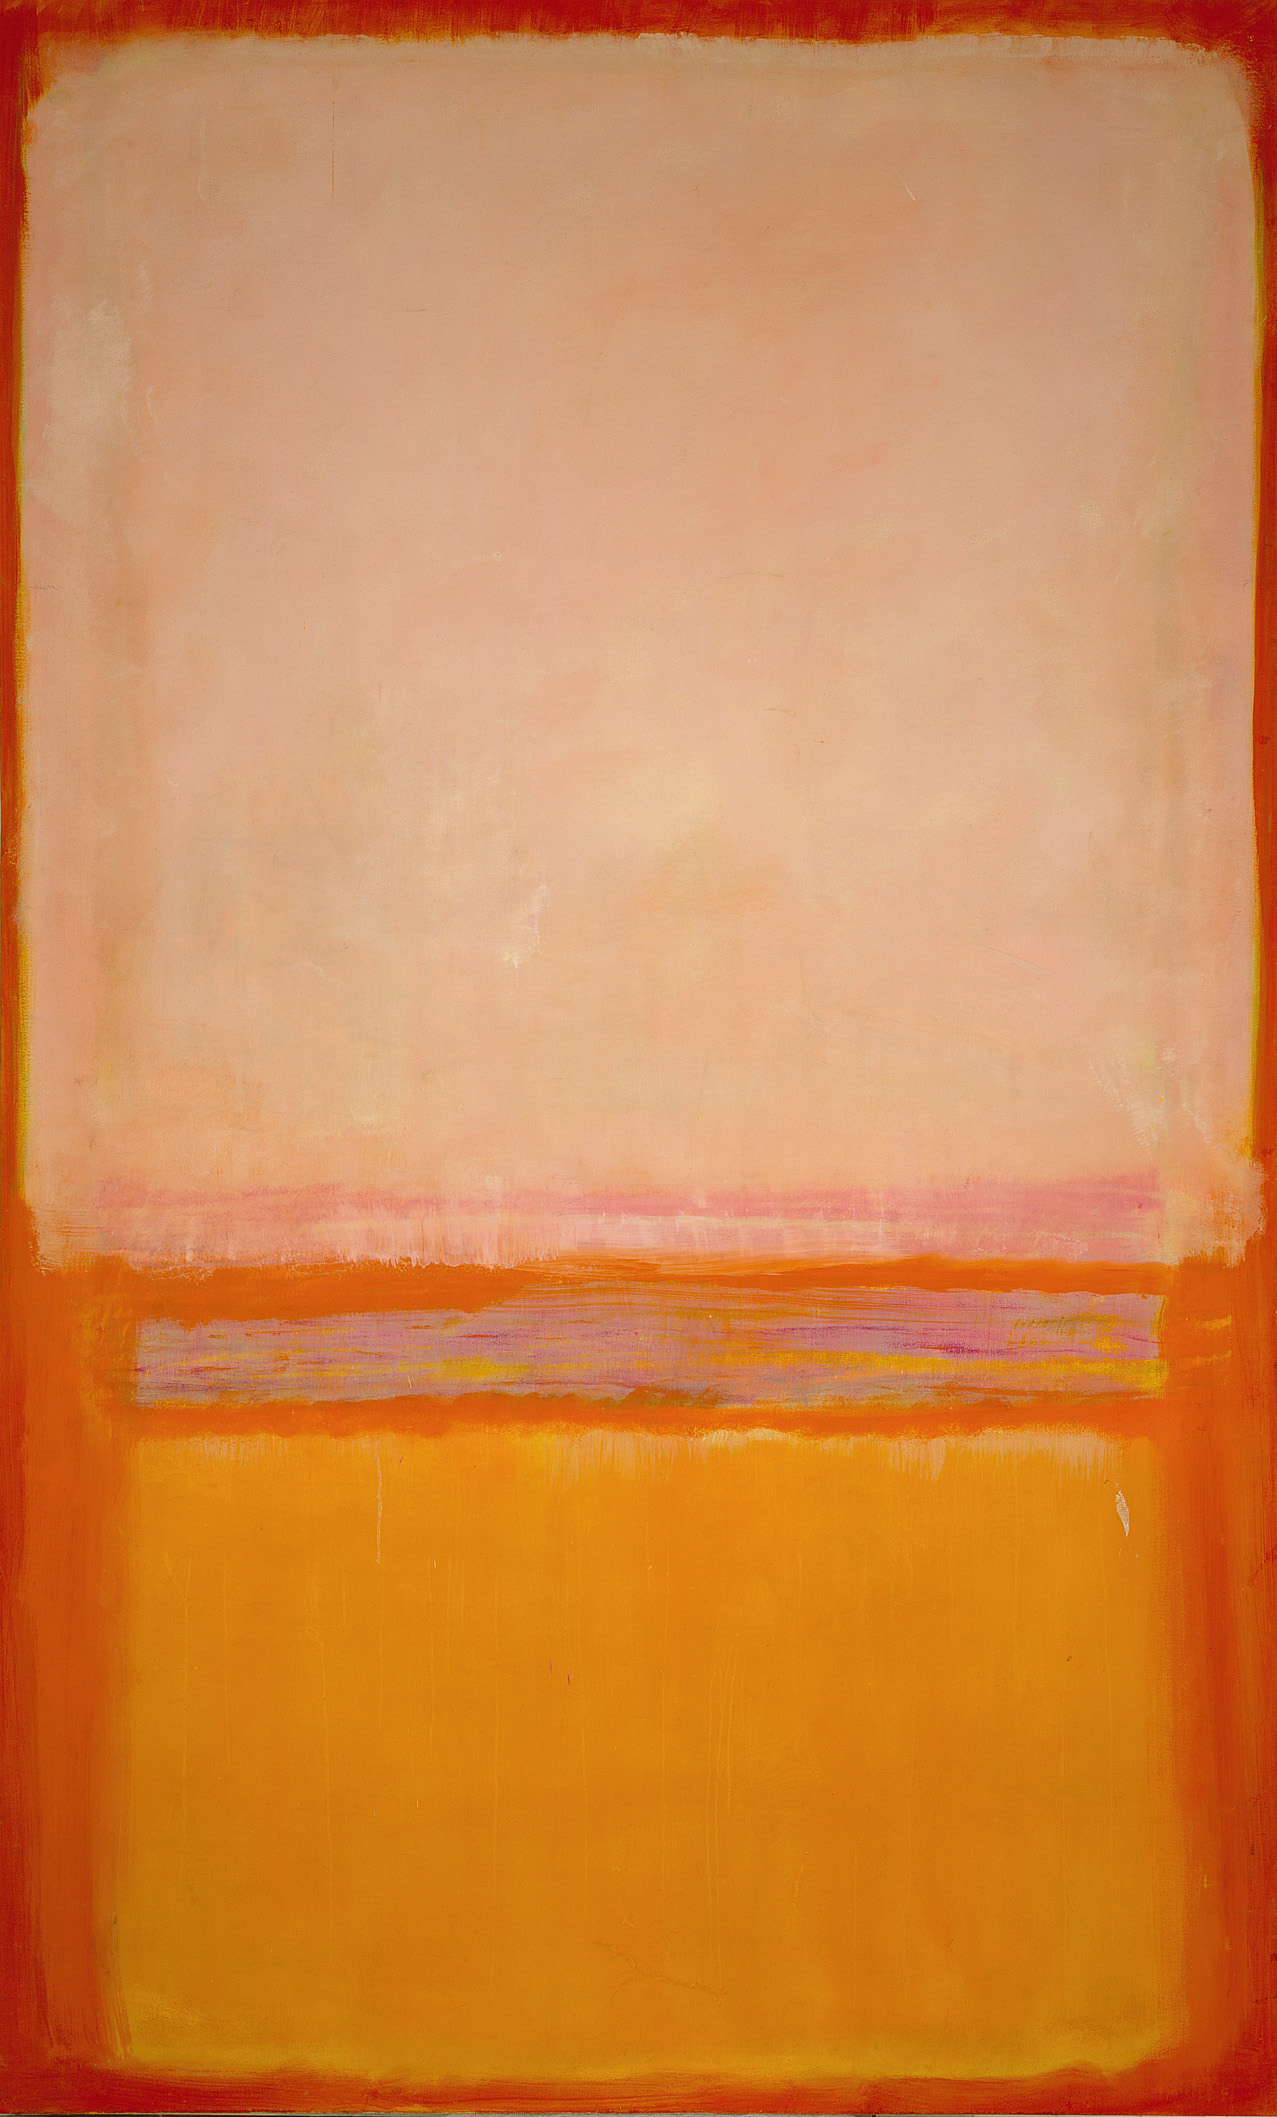 Bez tytułu by Mark Rothko - 1950 - 230.2 × 128.9 cm 